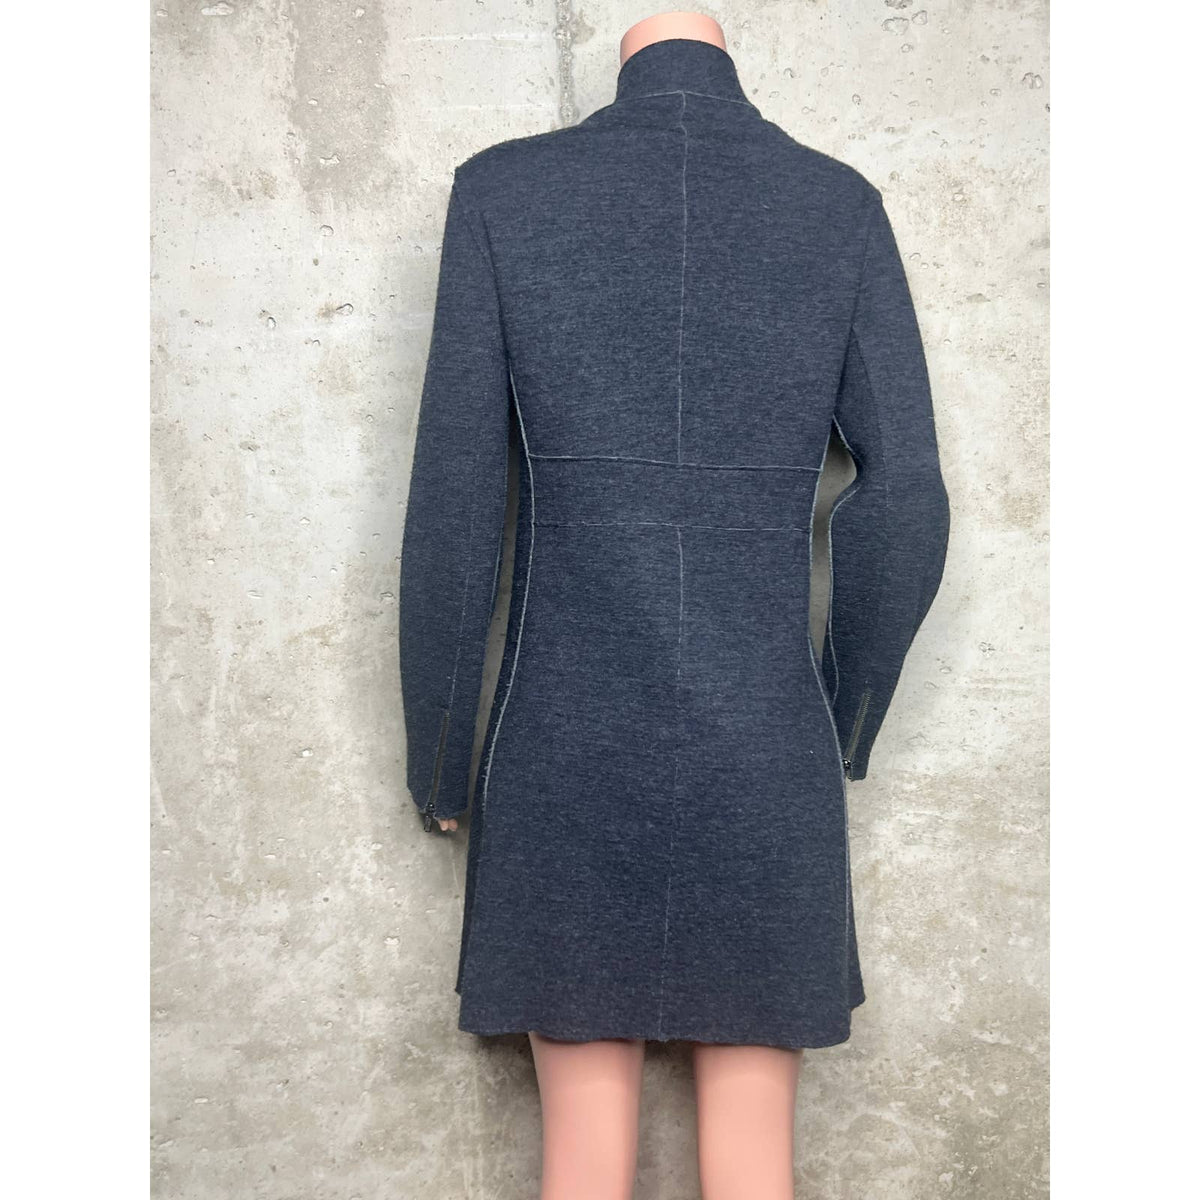 Eileen Fisher Grey Full Zip Merino Wool Jacket Sz. Small